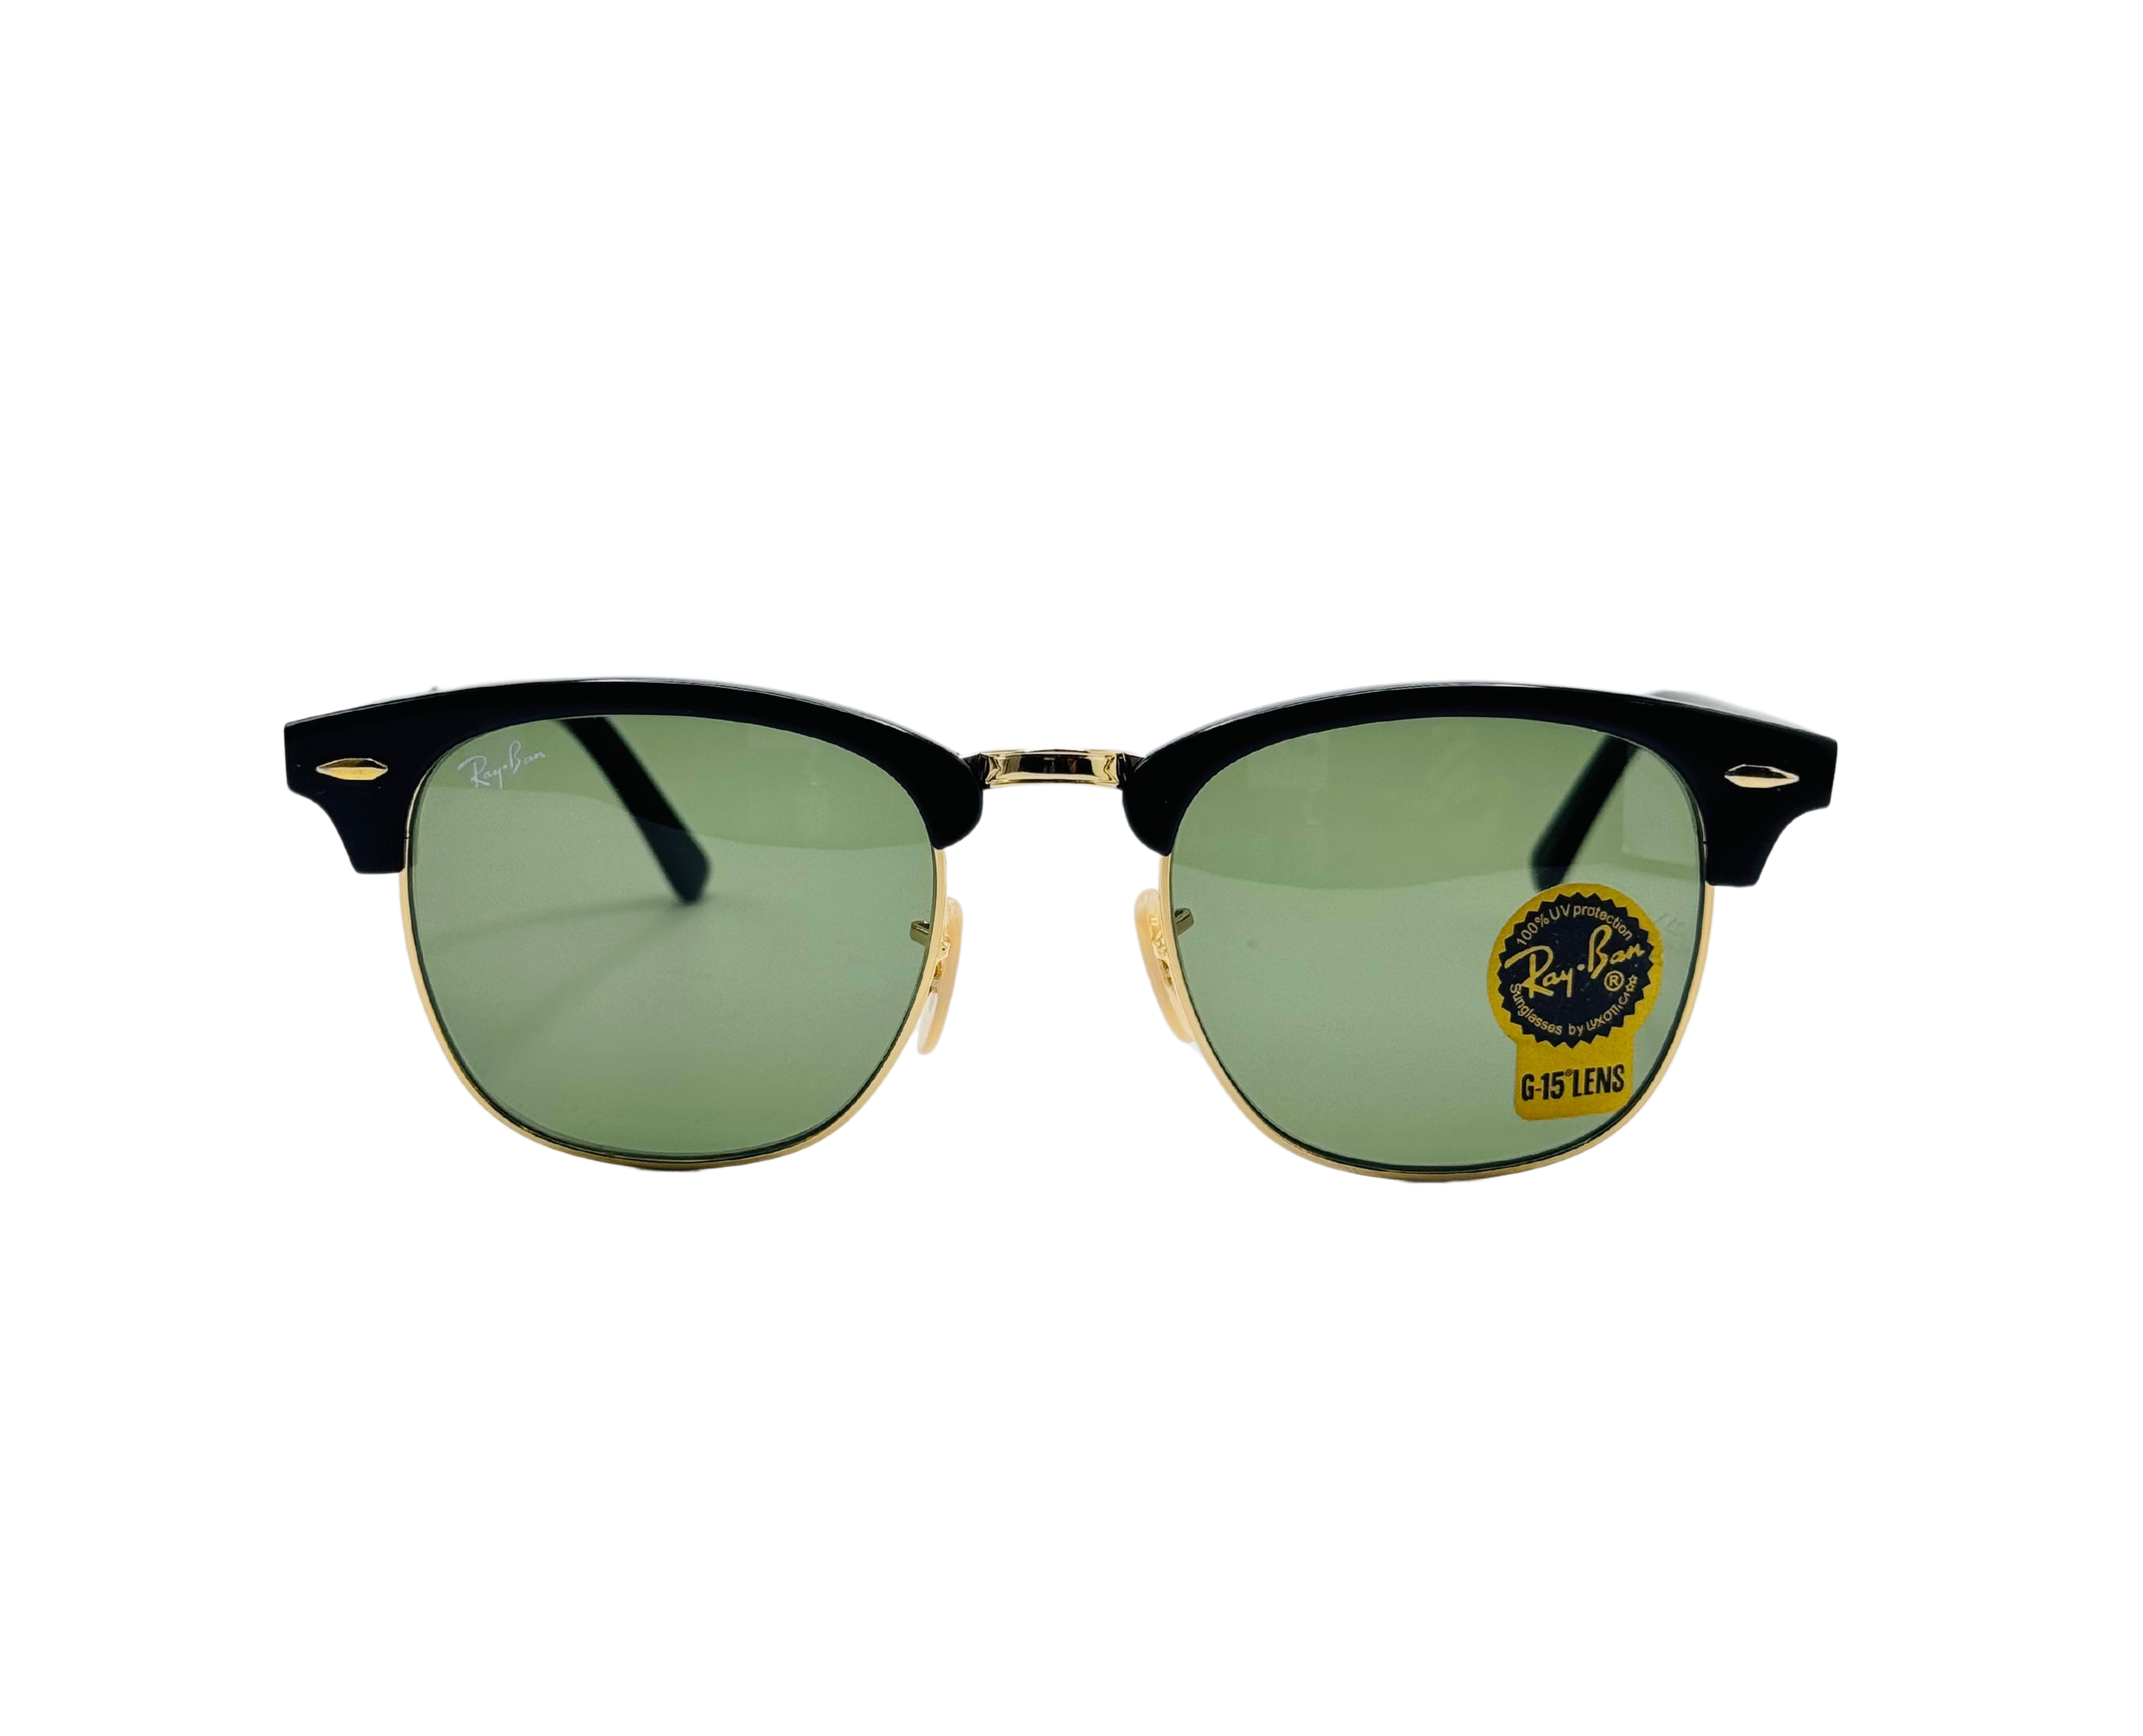 NS Luxury - 3016 - Clubmaster - Sunglasses